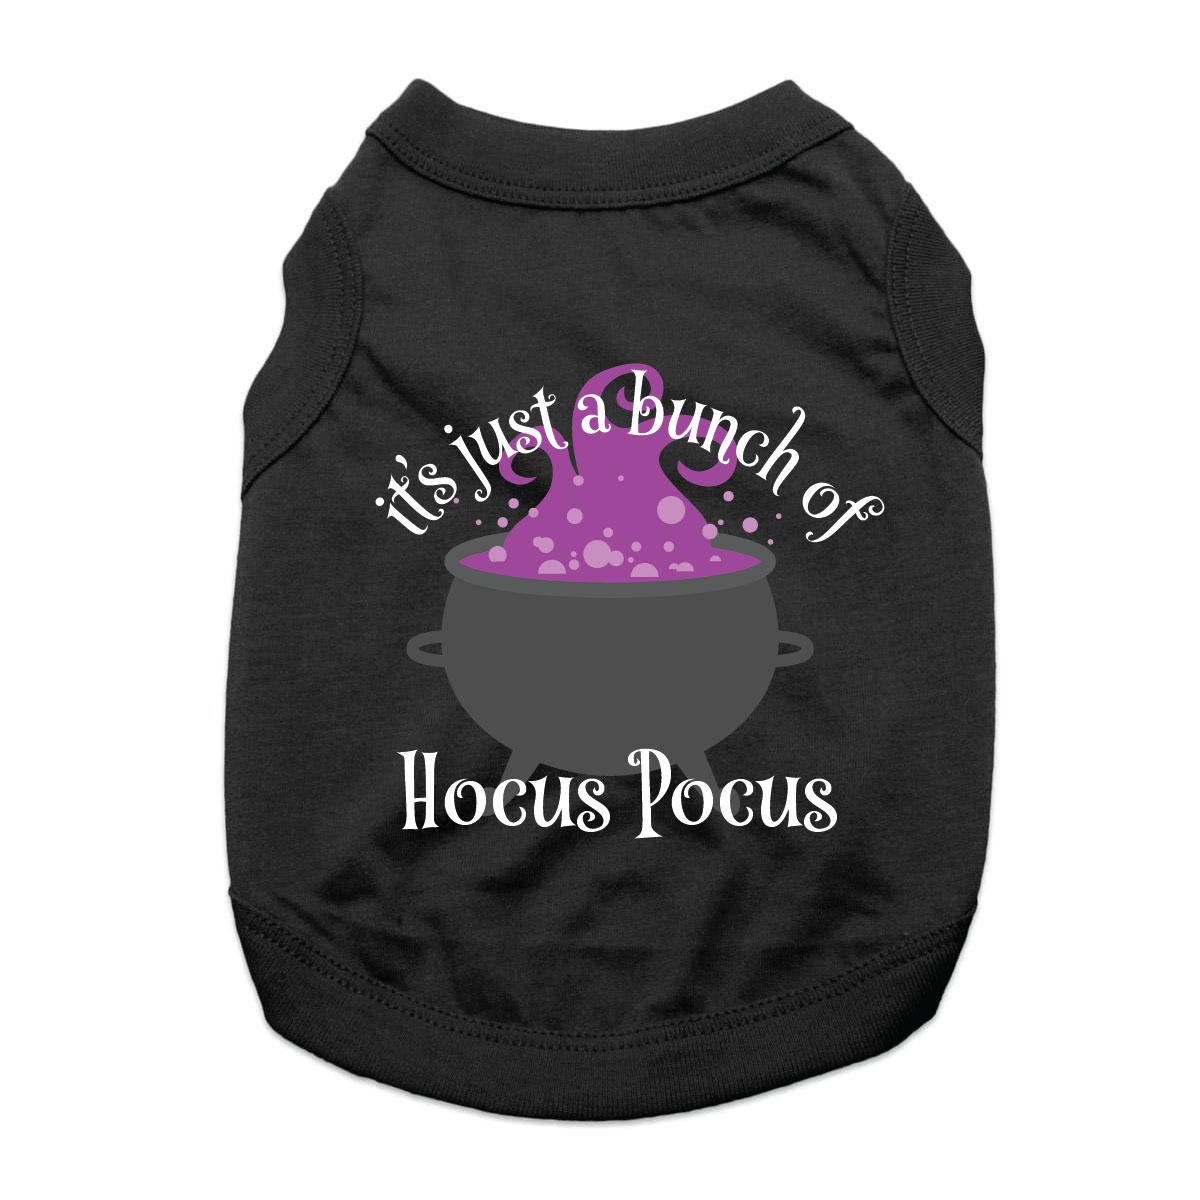 It's Just a Bunch of Hocus Pocus Dog Shirt - Black